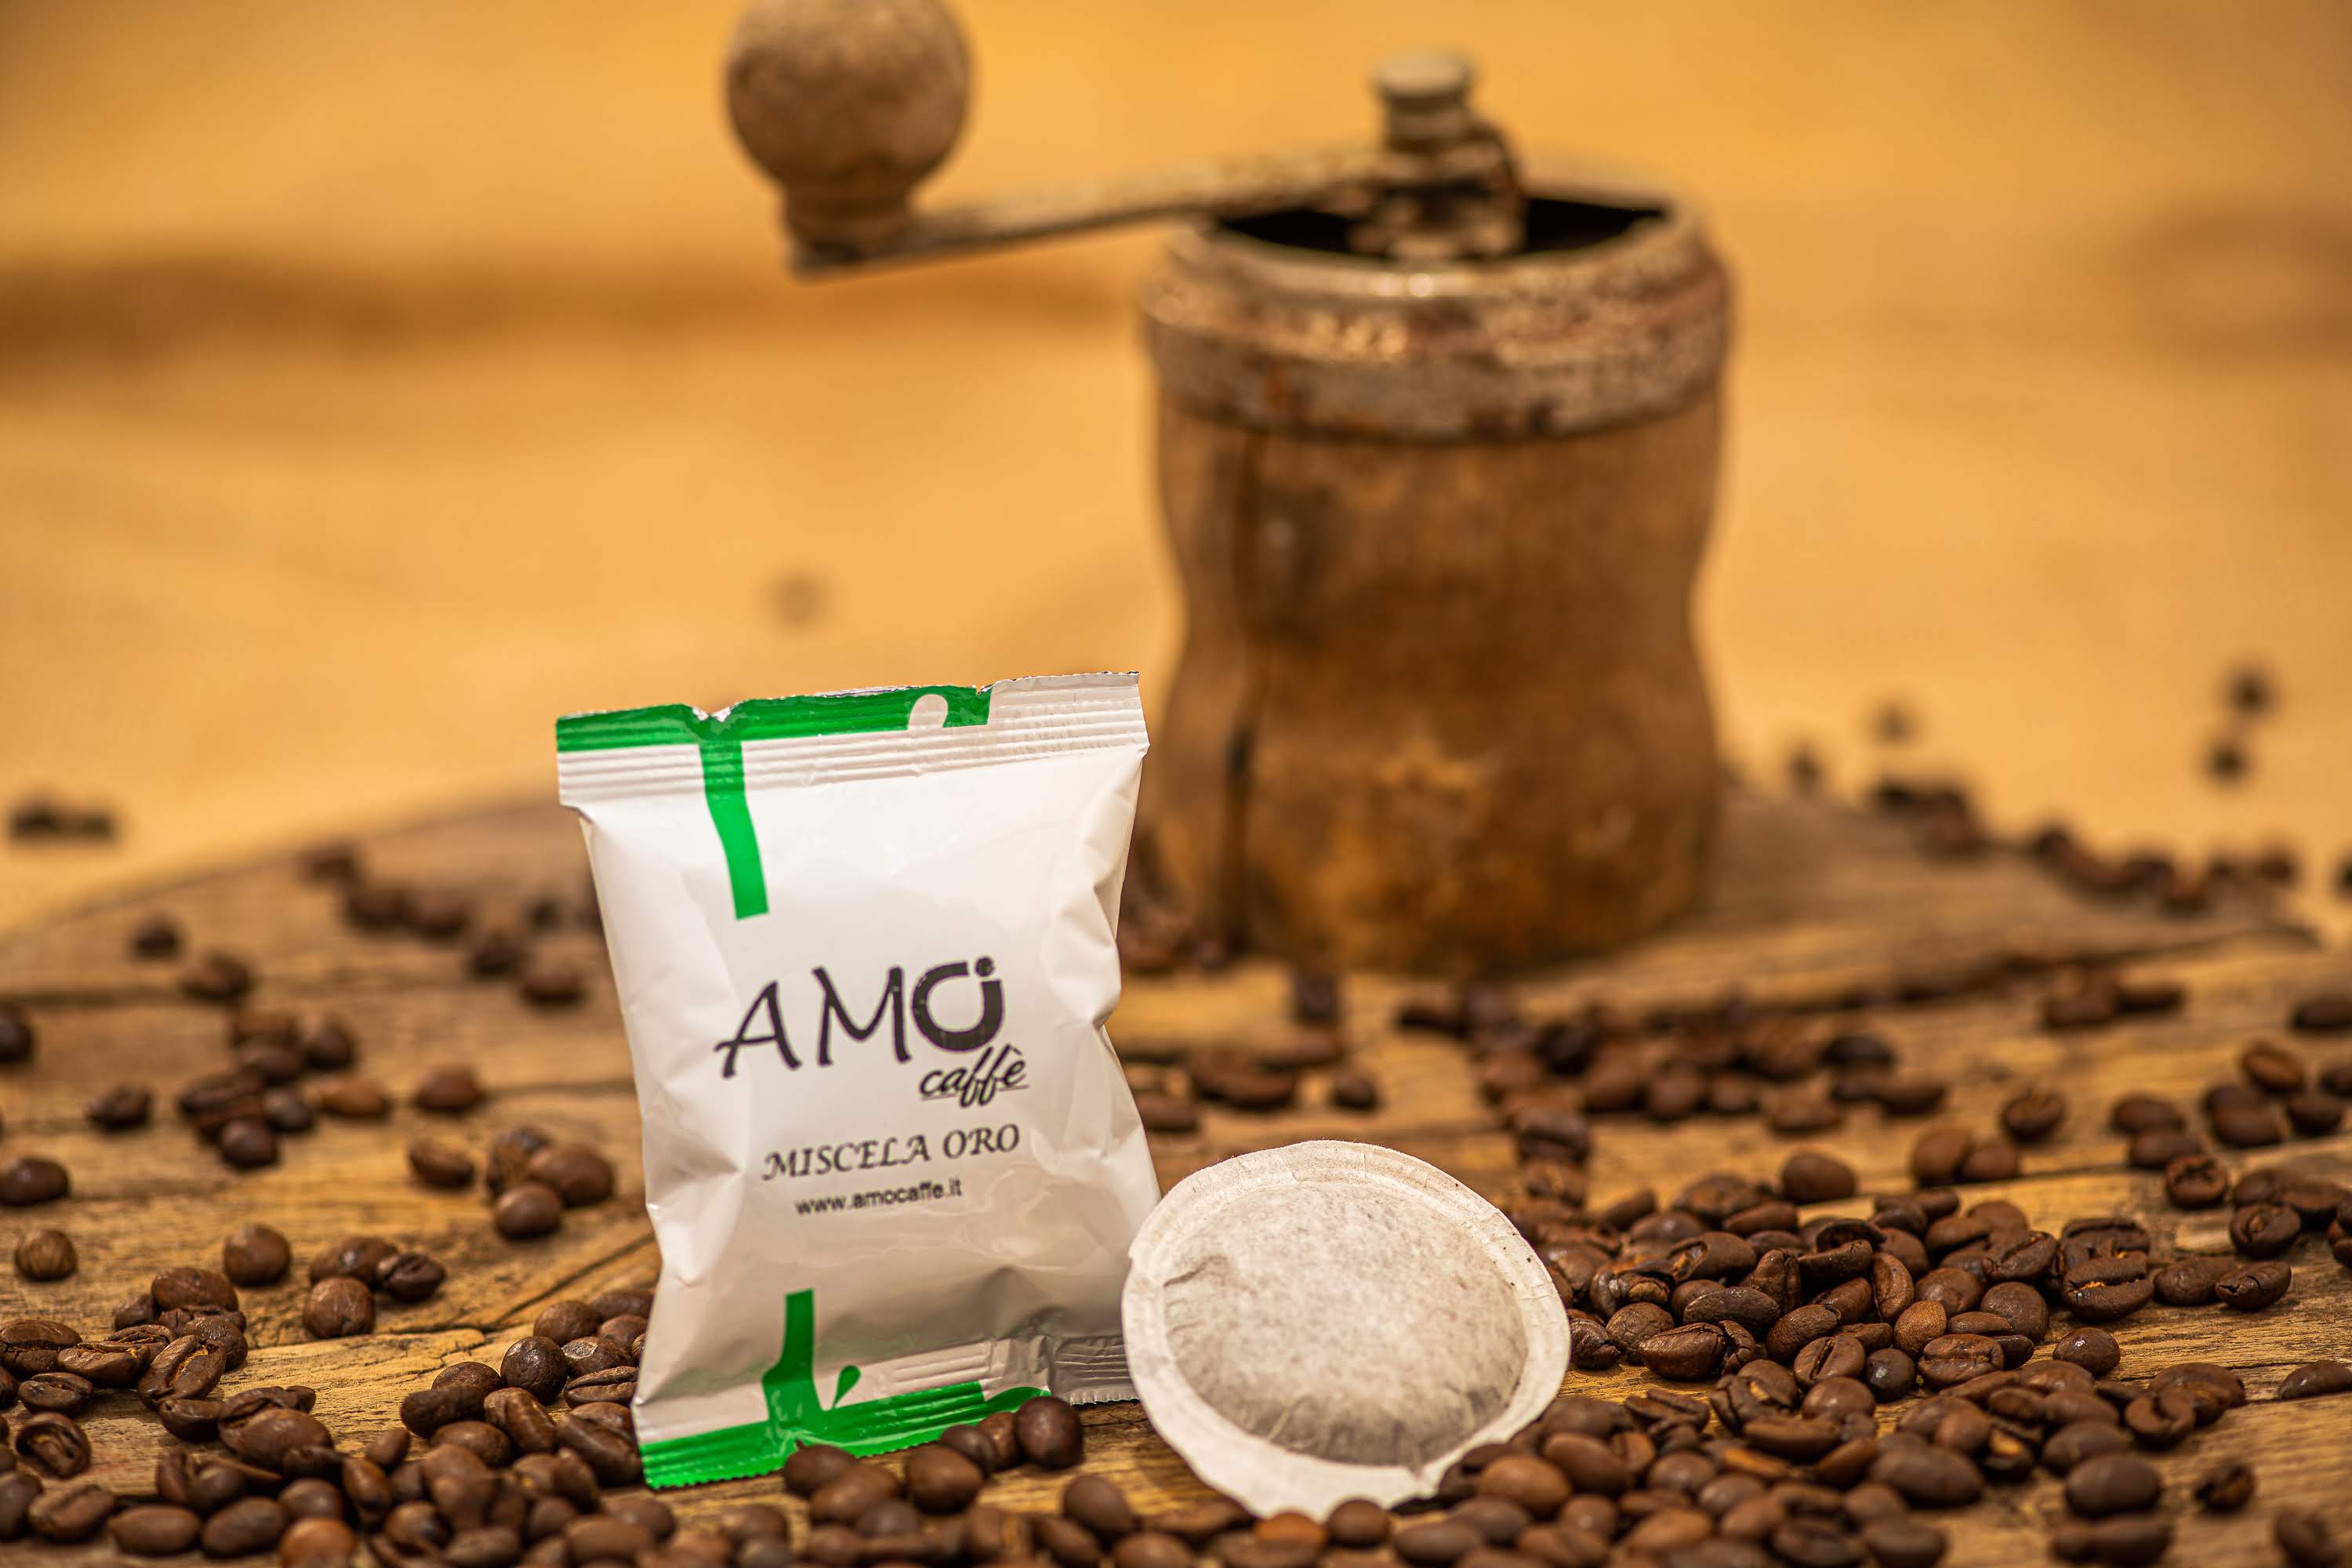 AMO CAFFÈ IN CIALDE MISCELA ORO SPECIALE (0,30€/1 PZ.) -150PZ.